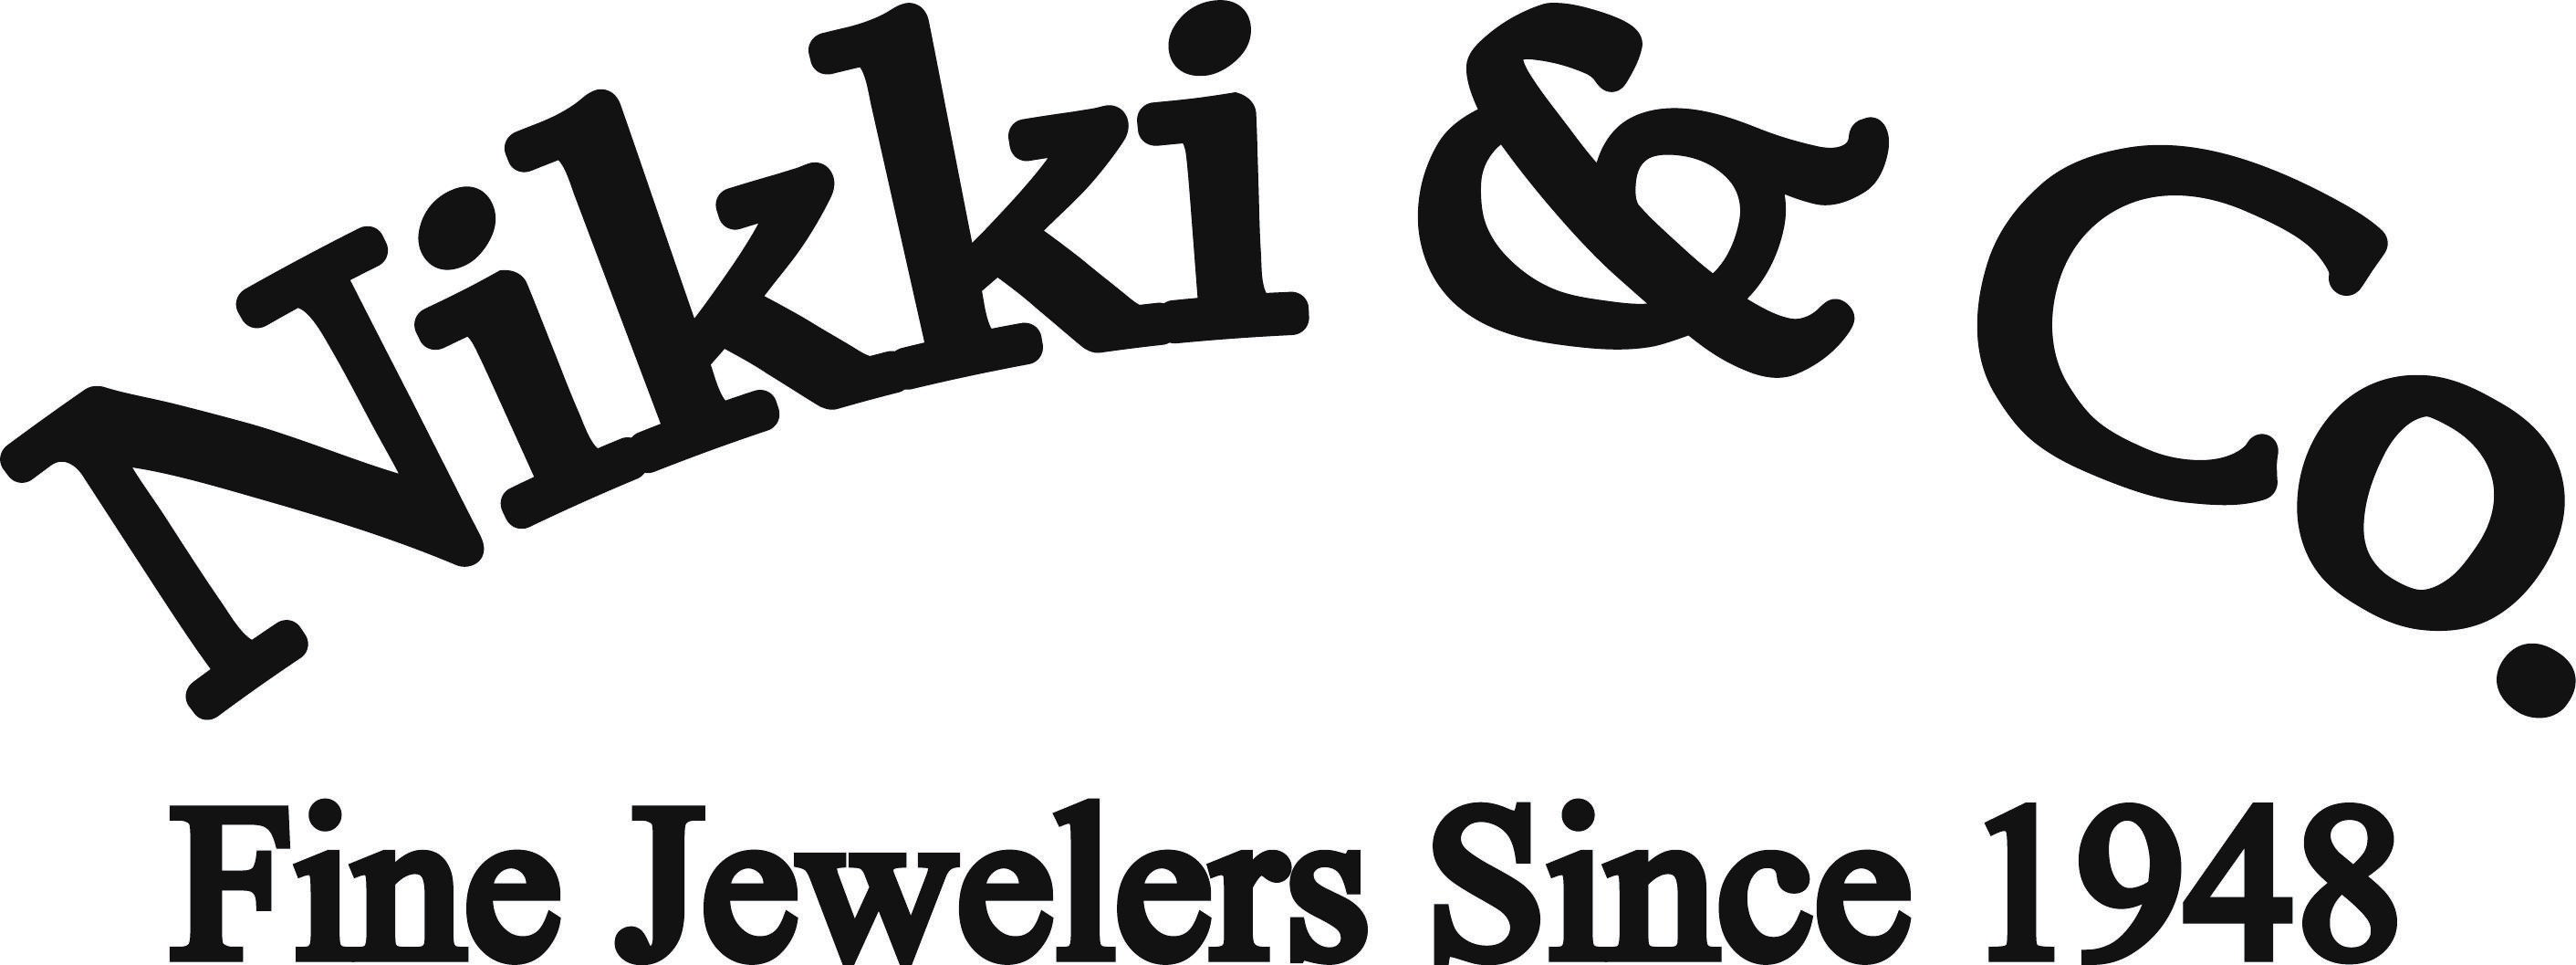 Nikki & Co. Logo